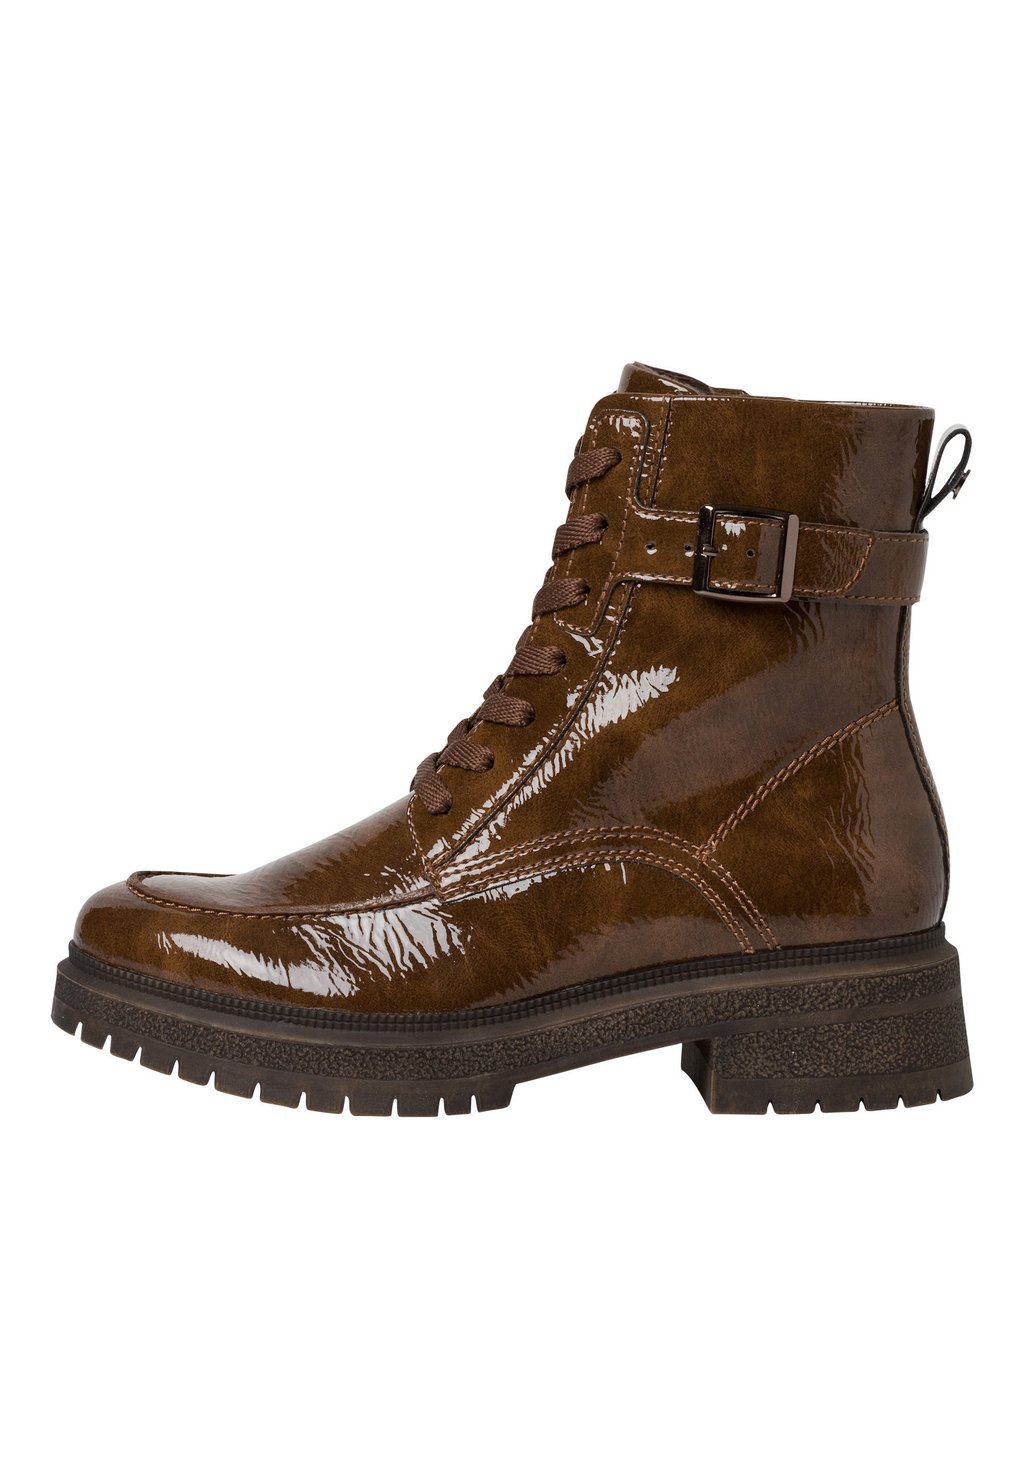 Ботинки на шнуровке Tamaris, коричневый ботинки на шнурках женские tamaris коричневый комб 39